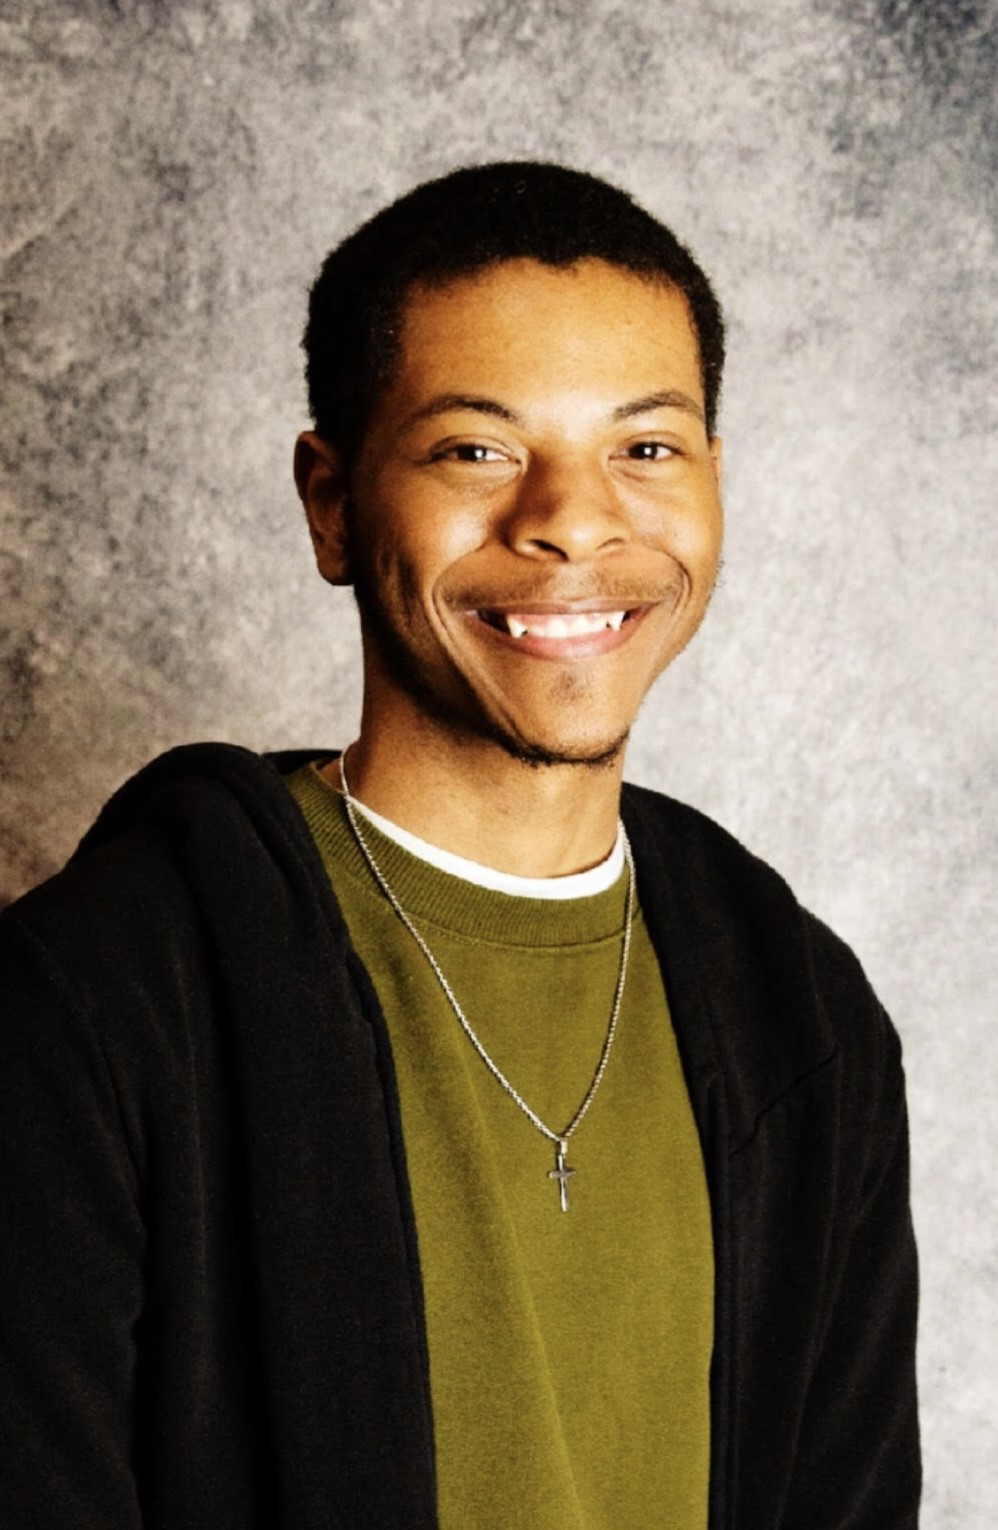 Male student smiling in a photo studio portrait